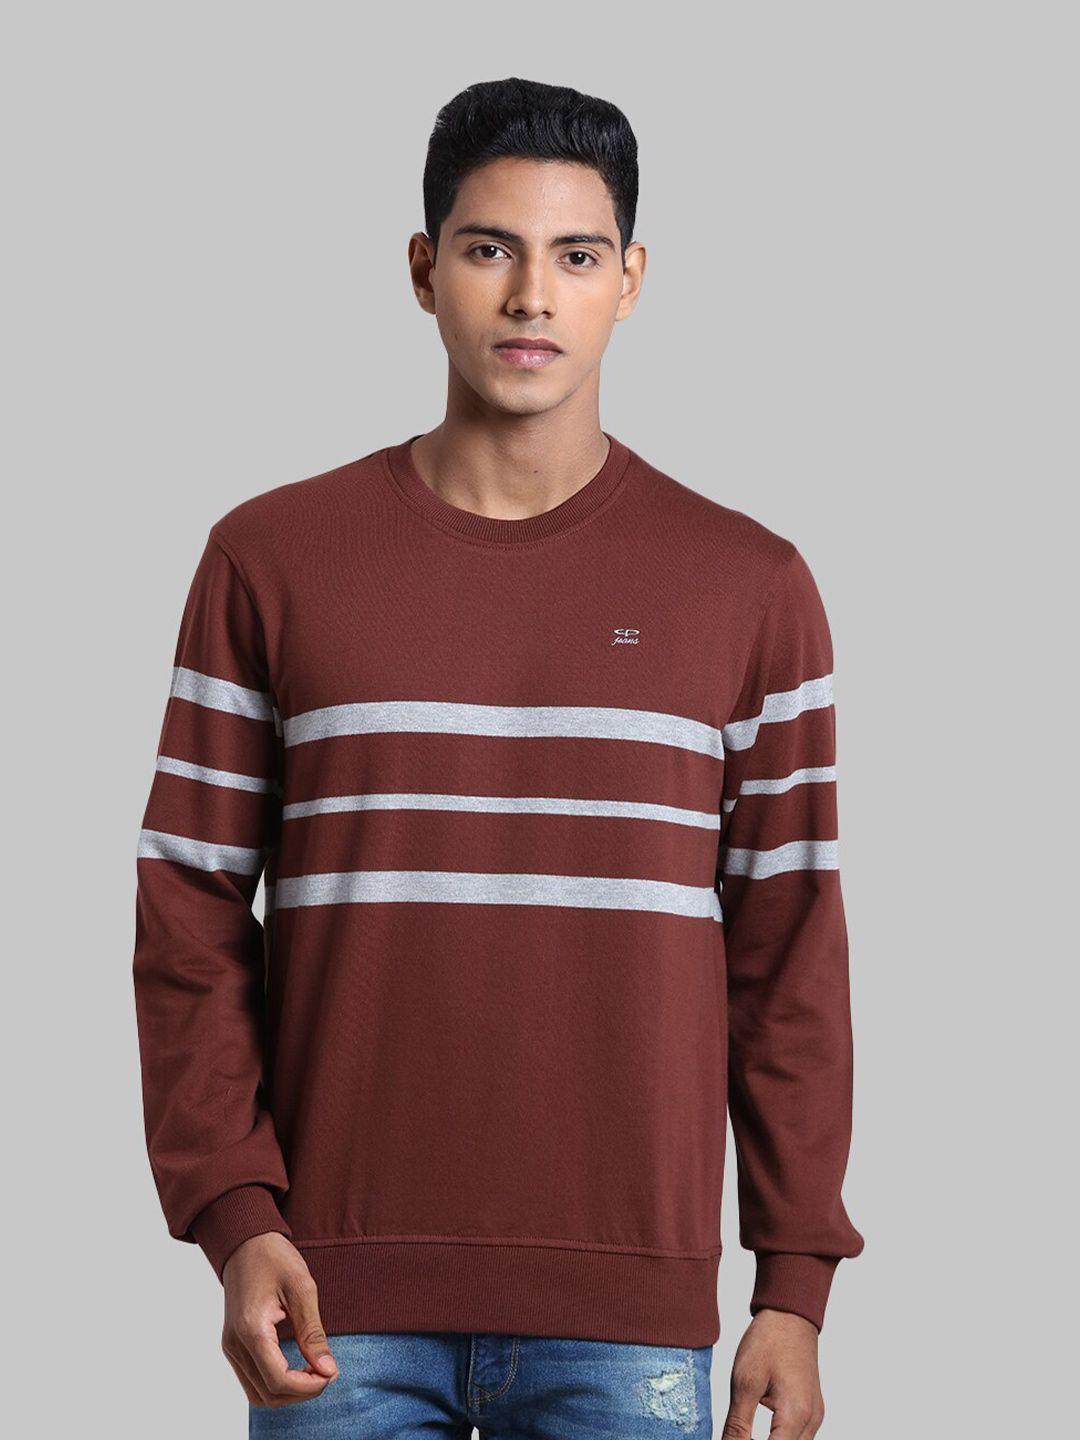 colorplus-men-brown-striped-cotton-sweatshirt